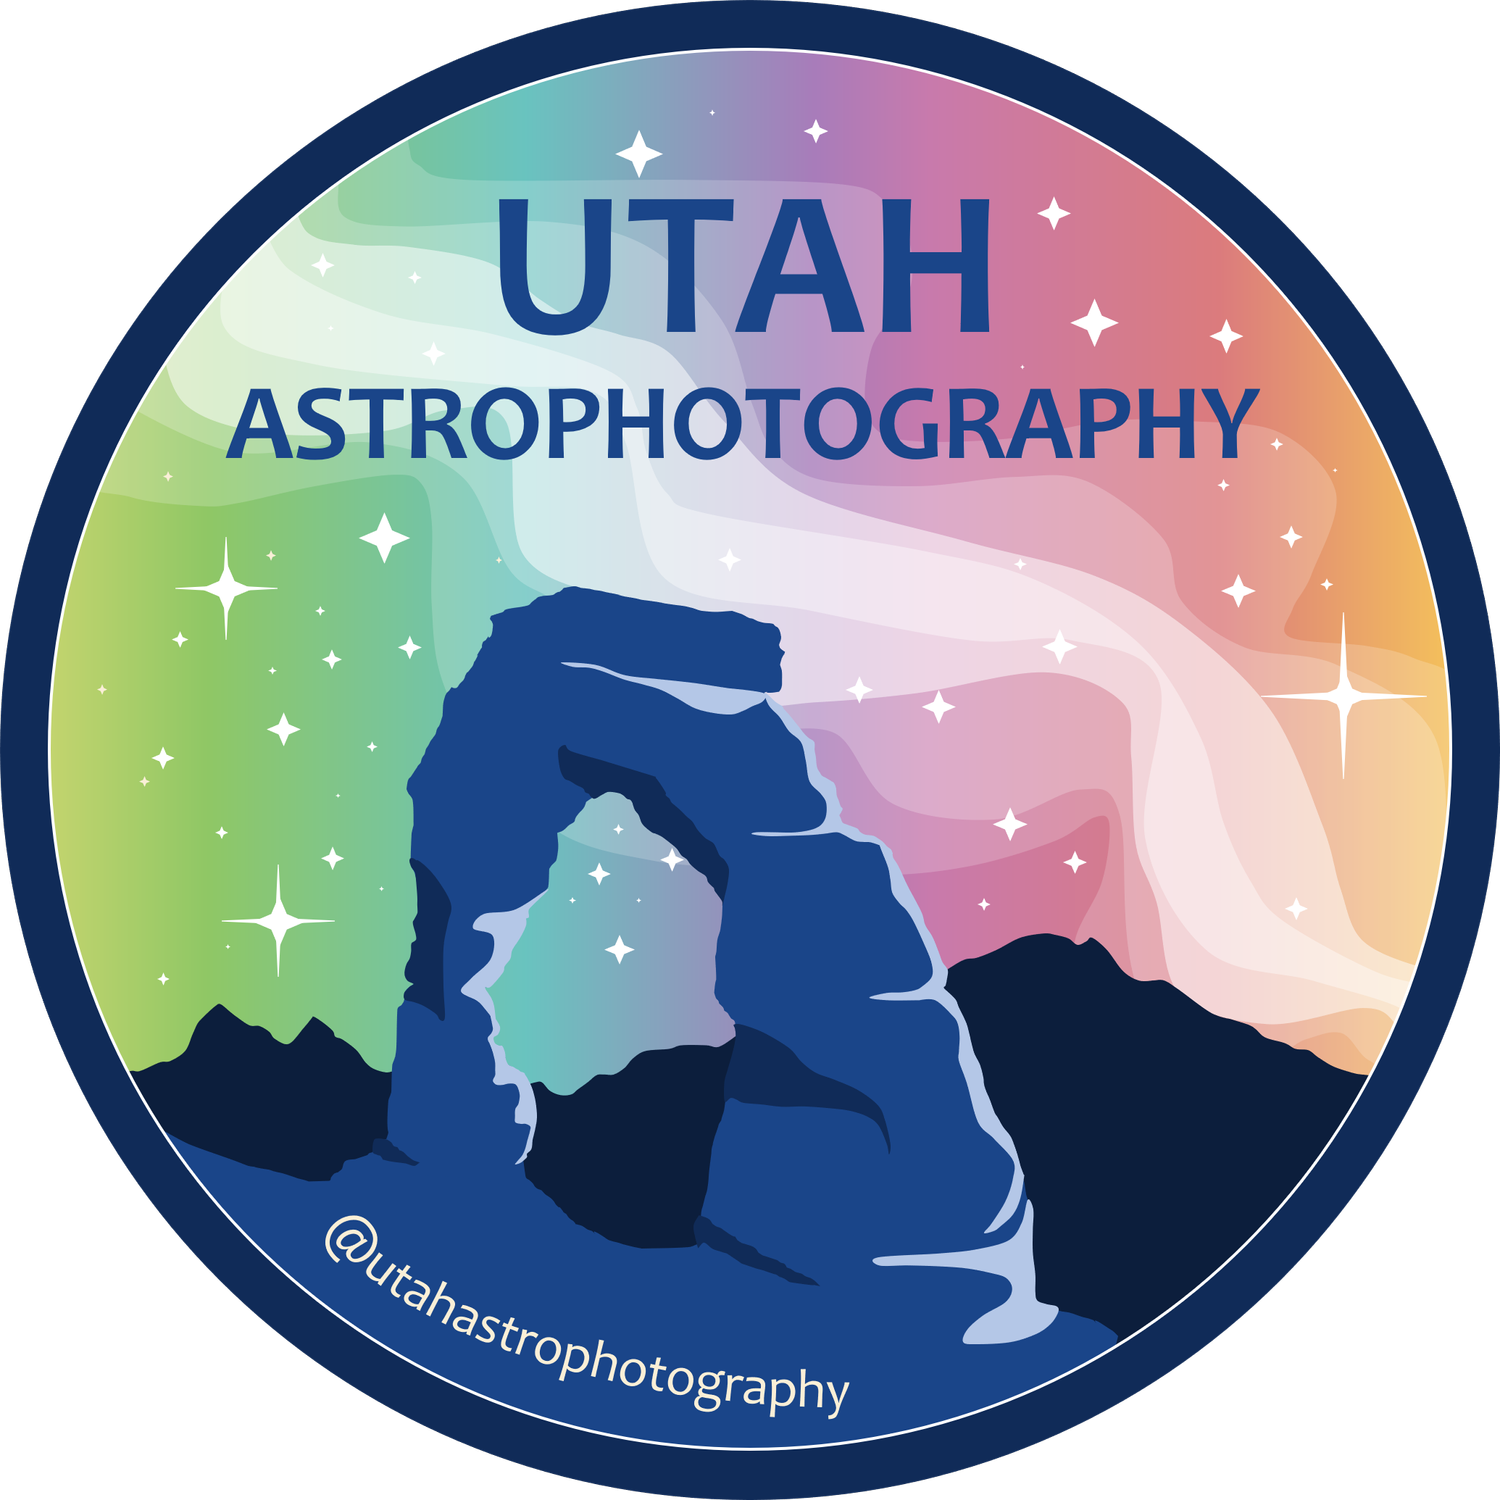 Utah Astrophotography